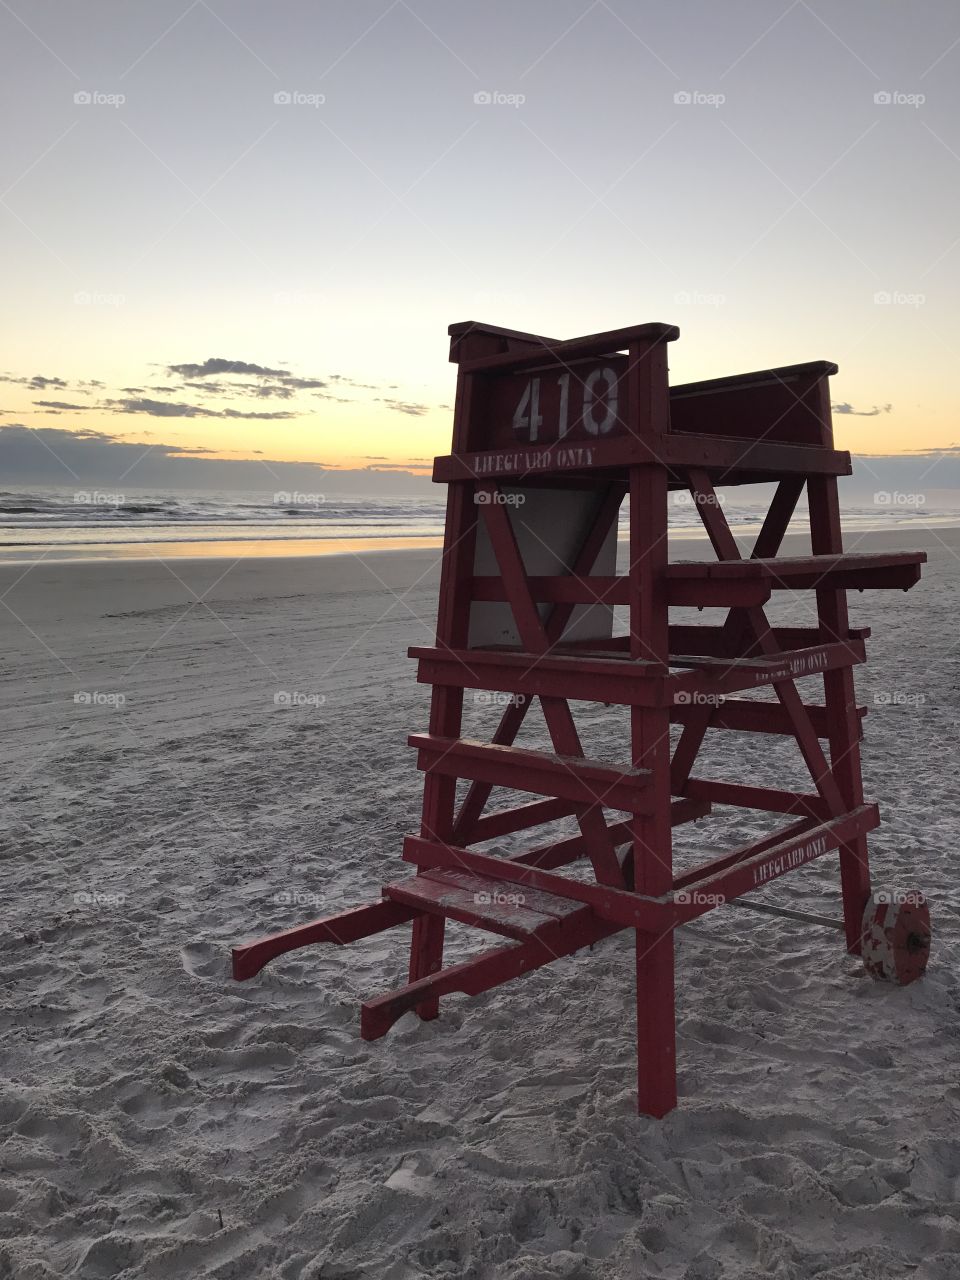 Lifeguard stand on beach 